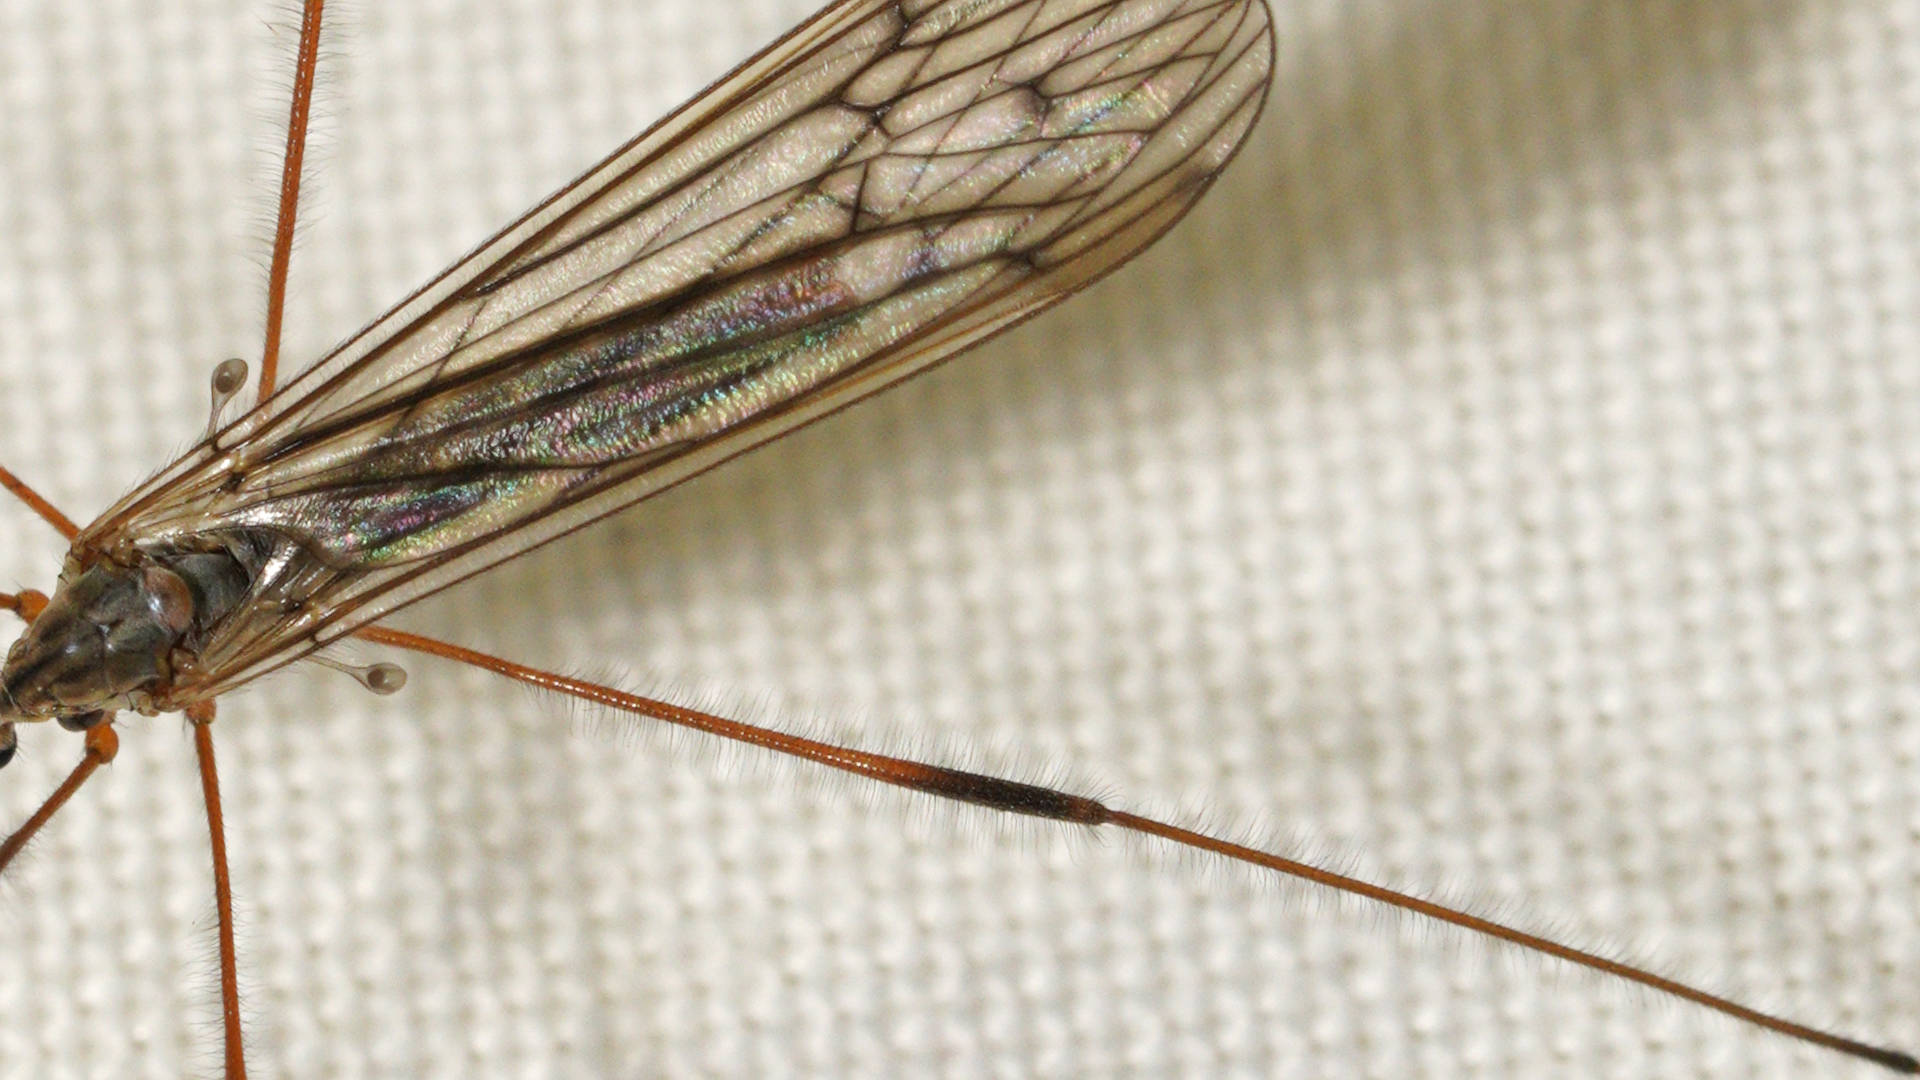 Short-palped Crane Fly (Symplecta pilipes)